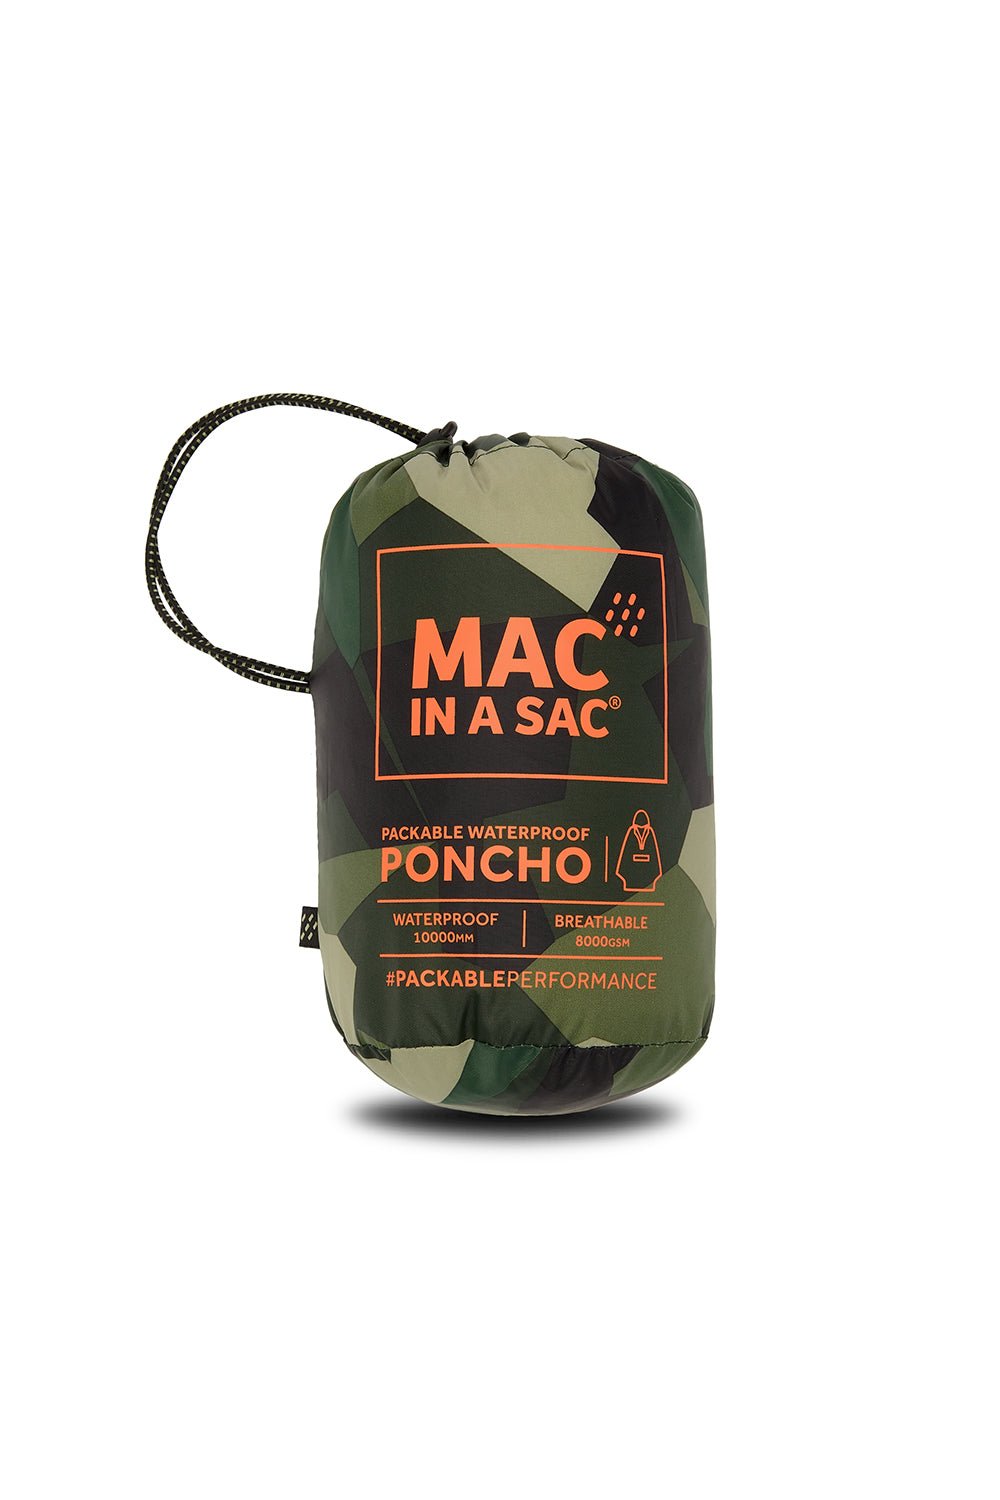 Poncho Packable Waterproof Cape - Green Camo